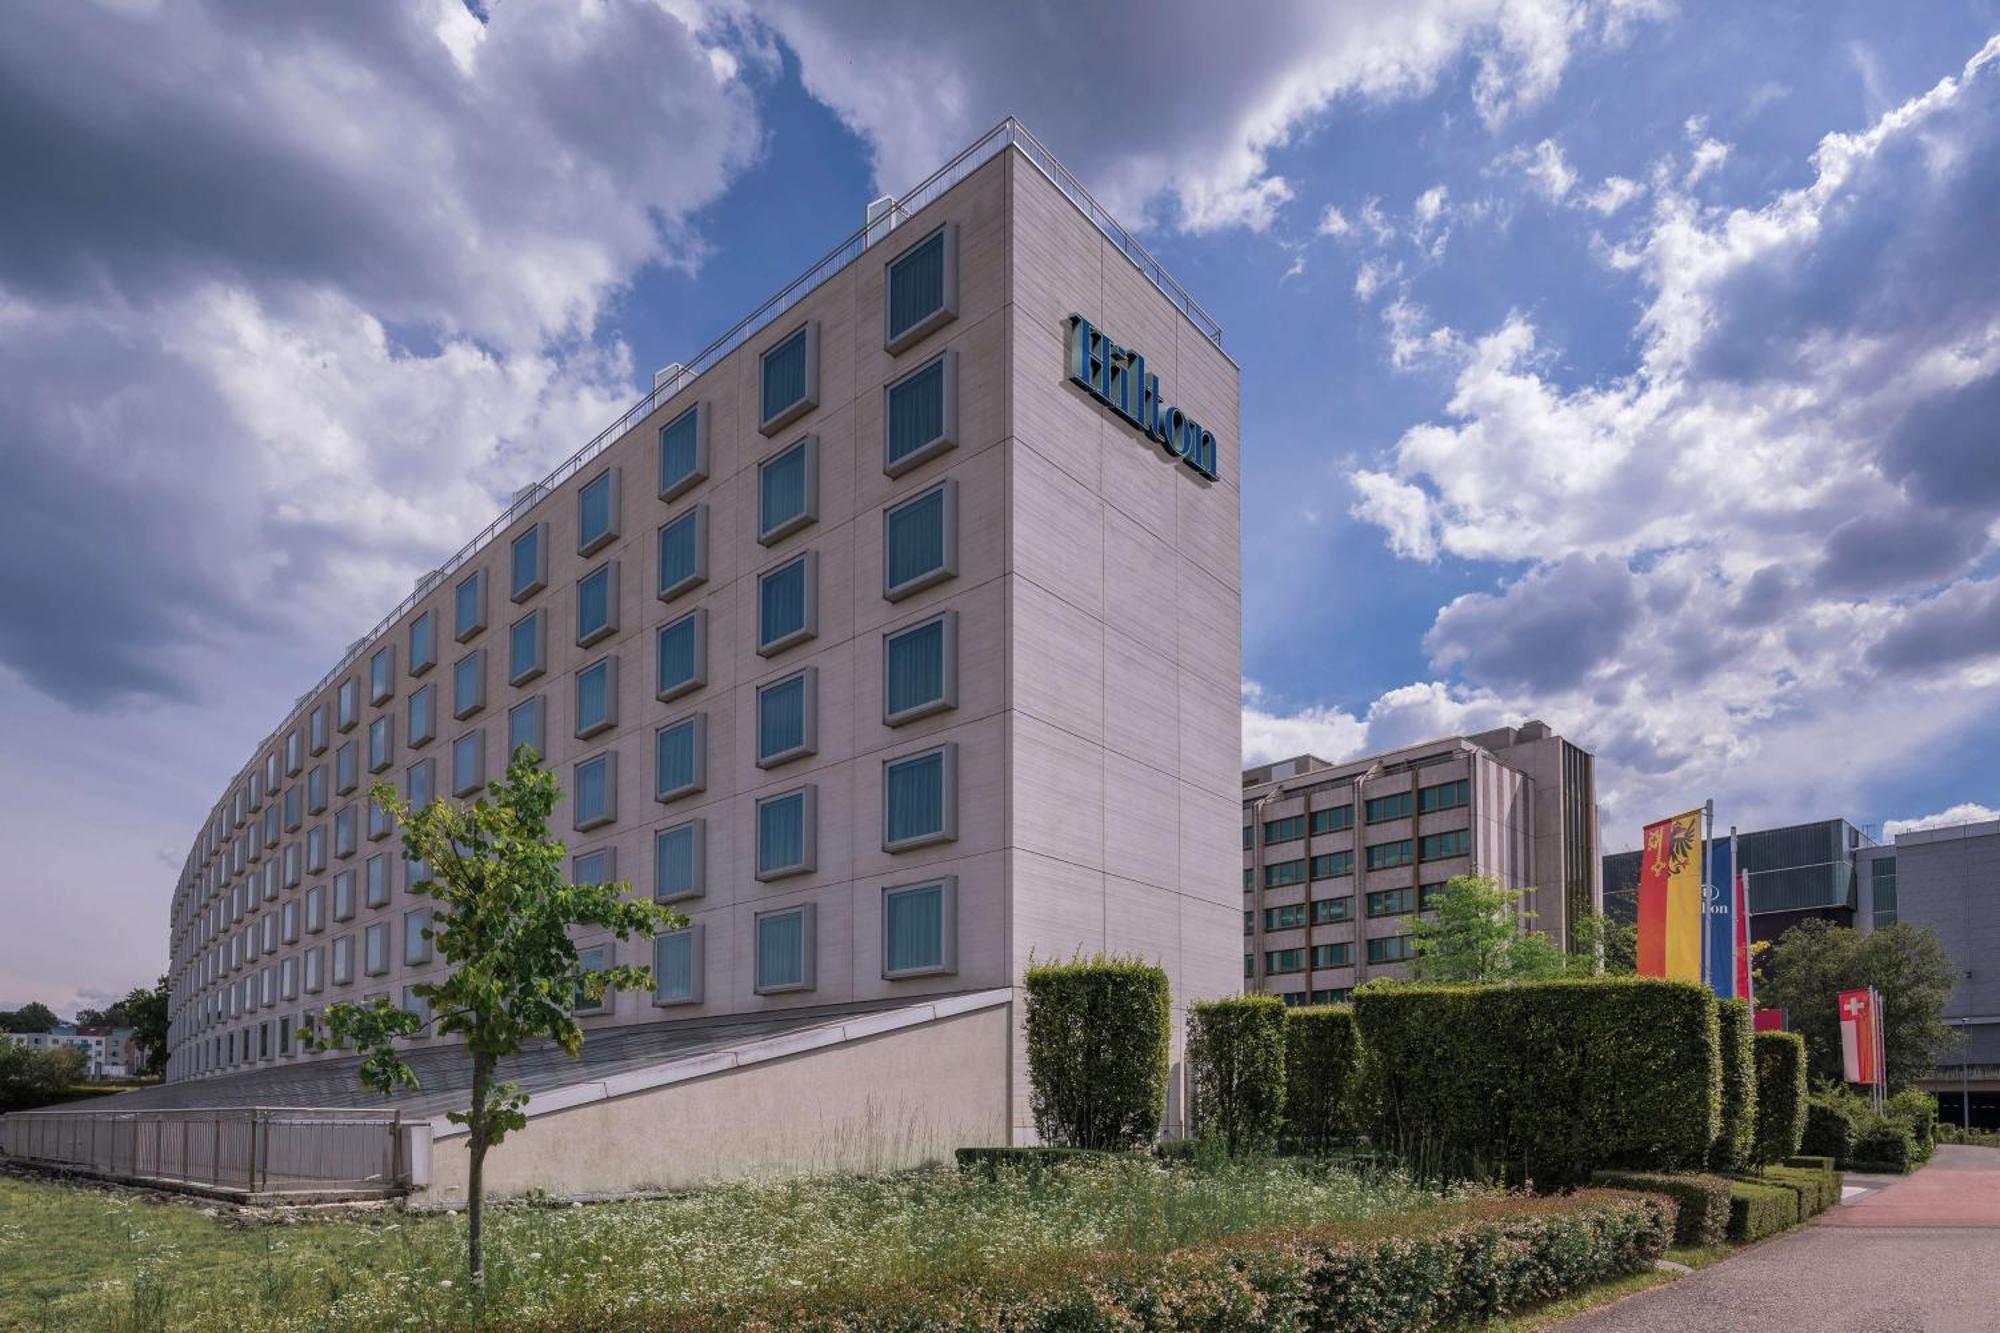 Hilton Geneva Hotel And Conference Centre Exterior foto